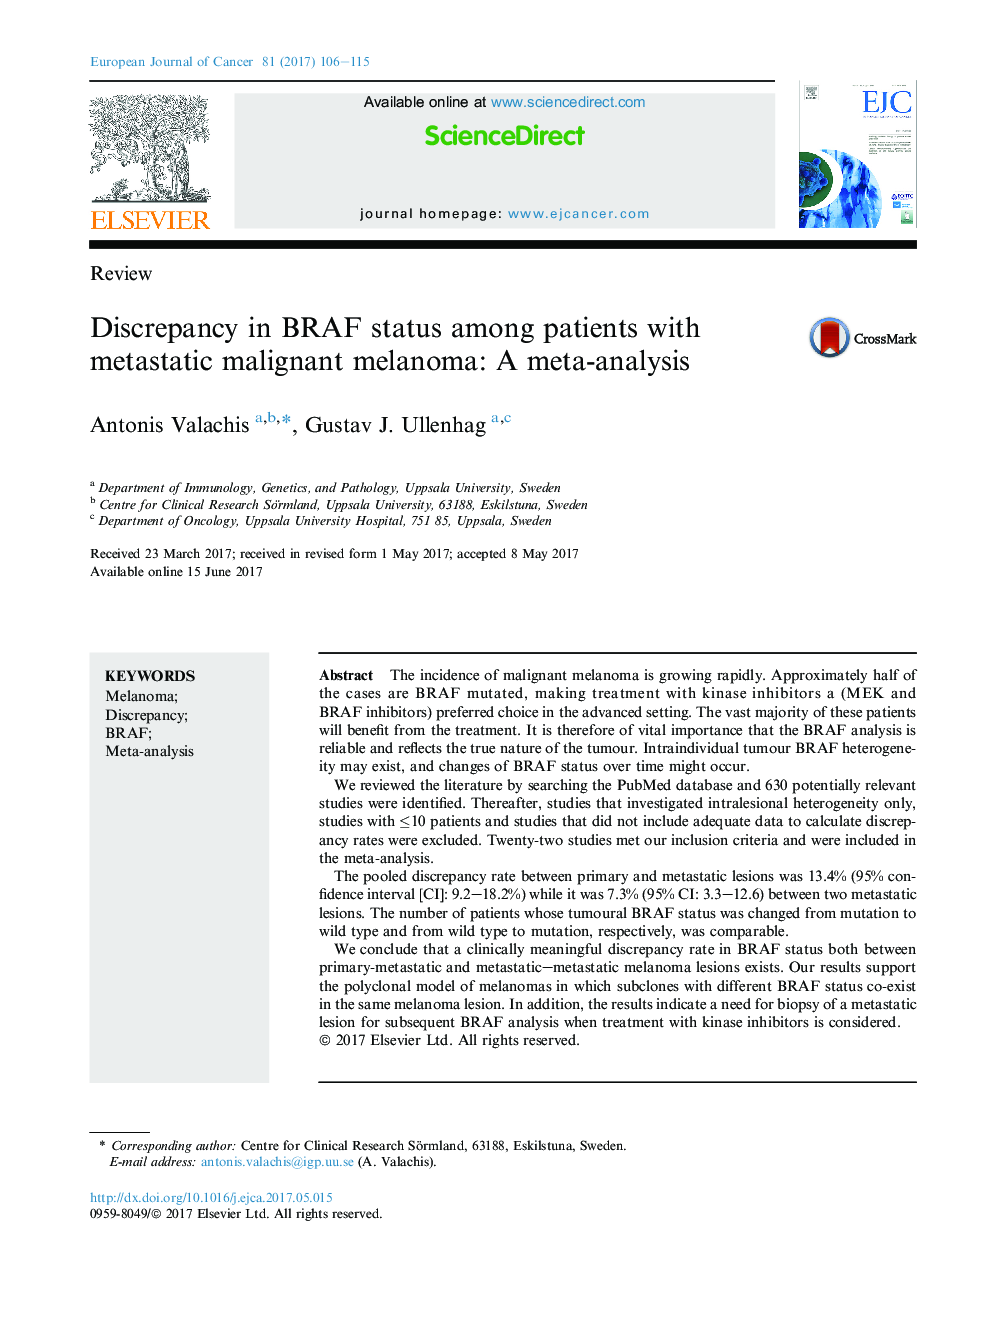 ReviewDiscrepancy in BRAF status among patients with metastatic malignant melanoma: A meta-analysis